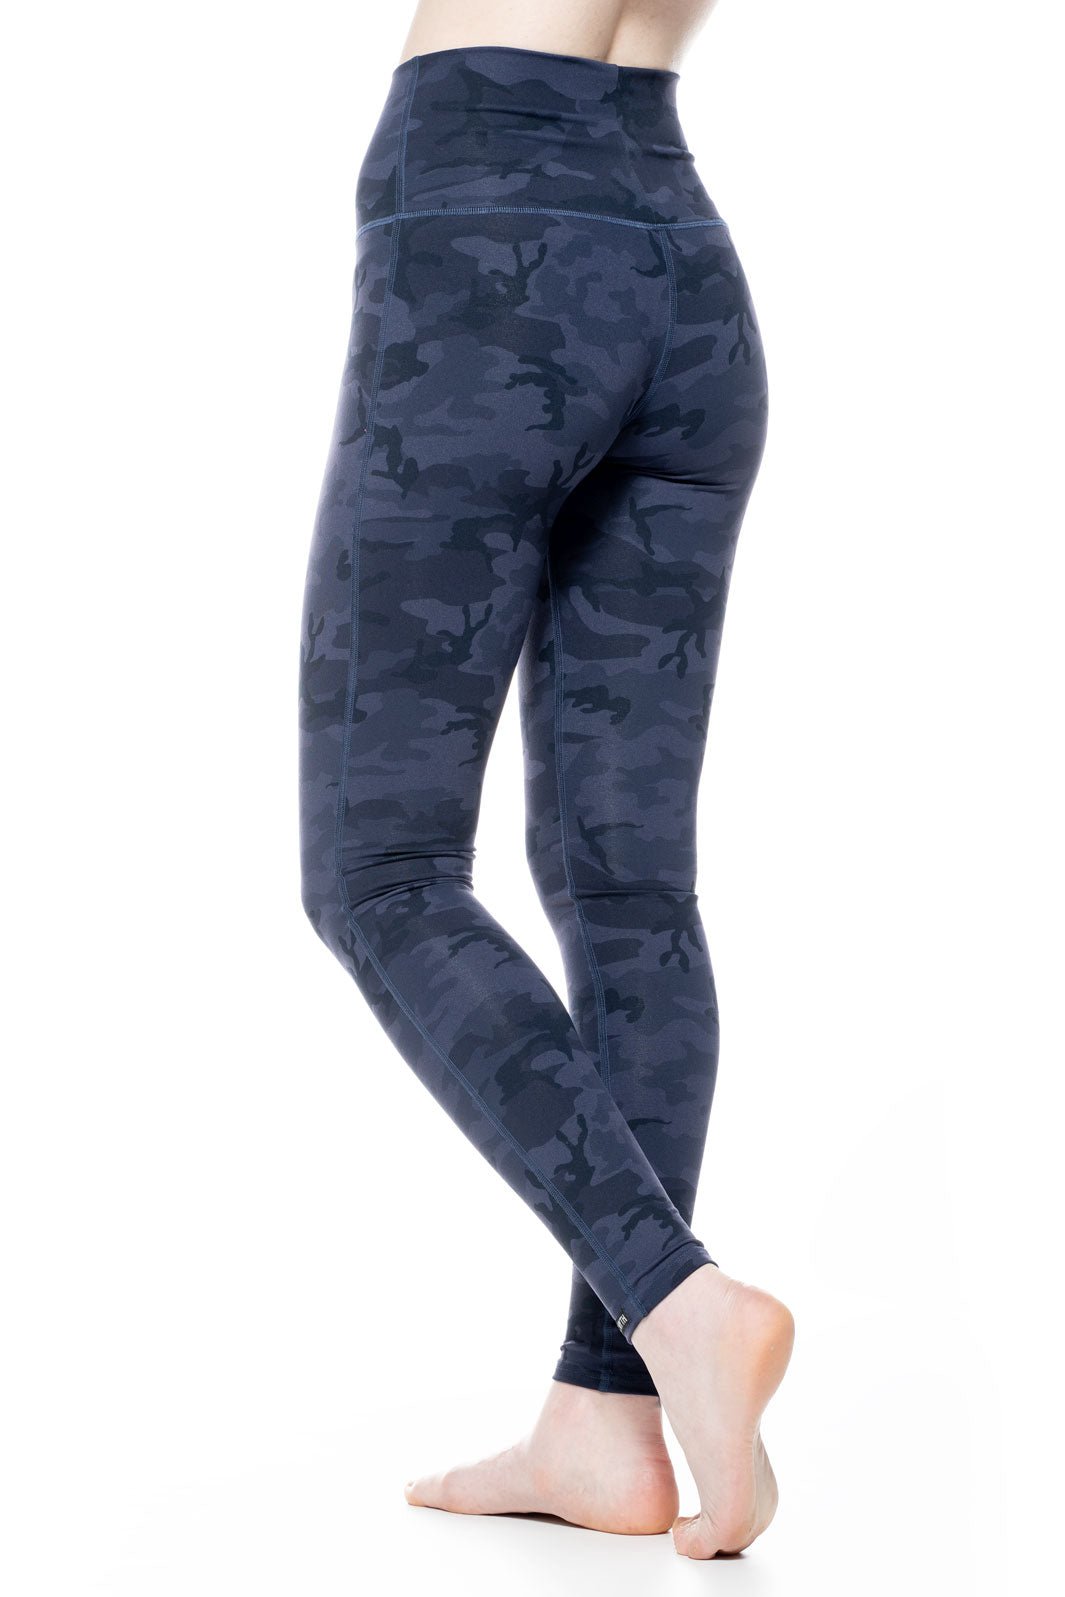 Blue camouflage leggings - back